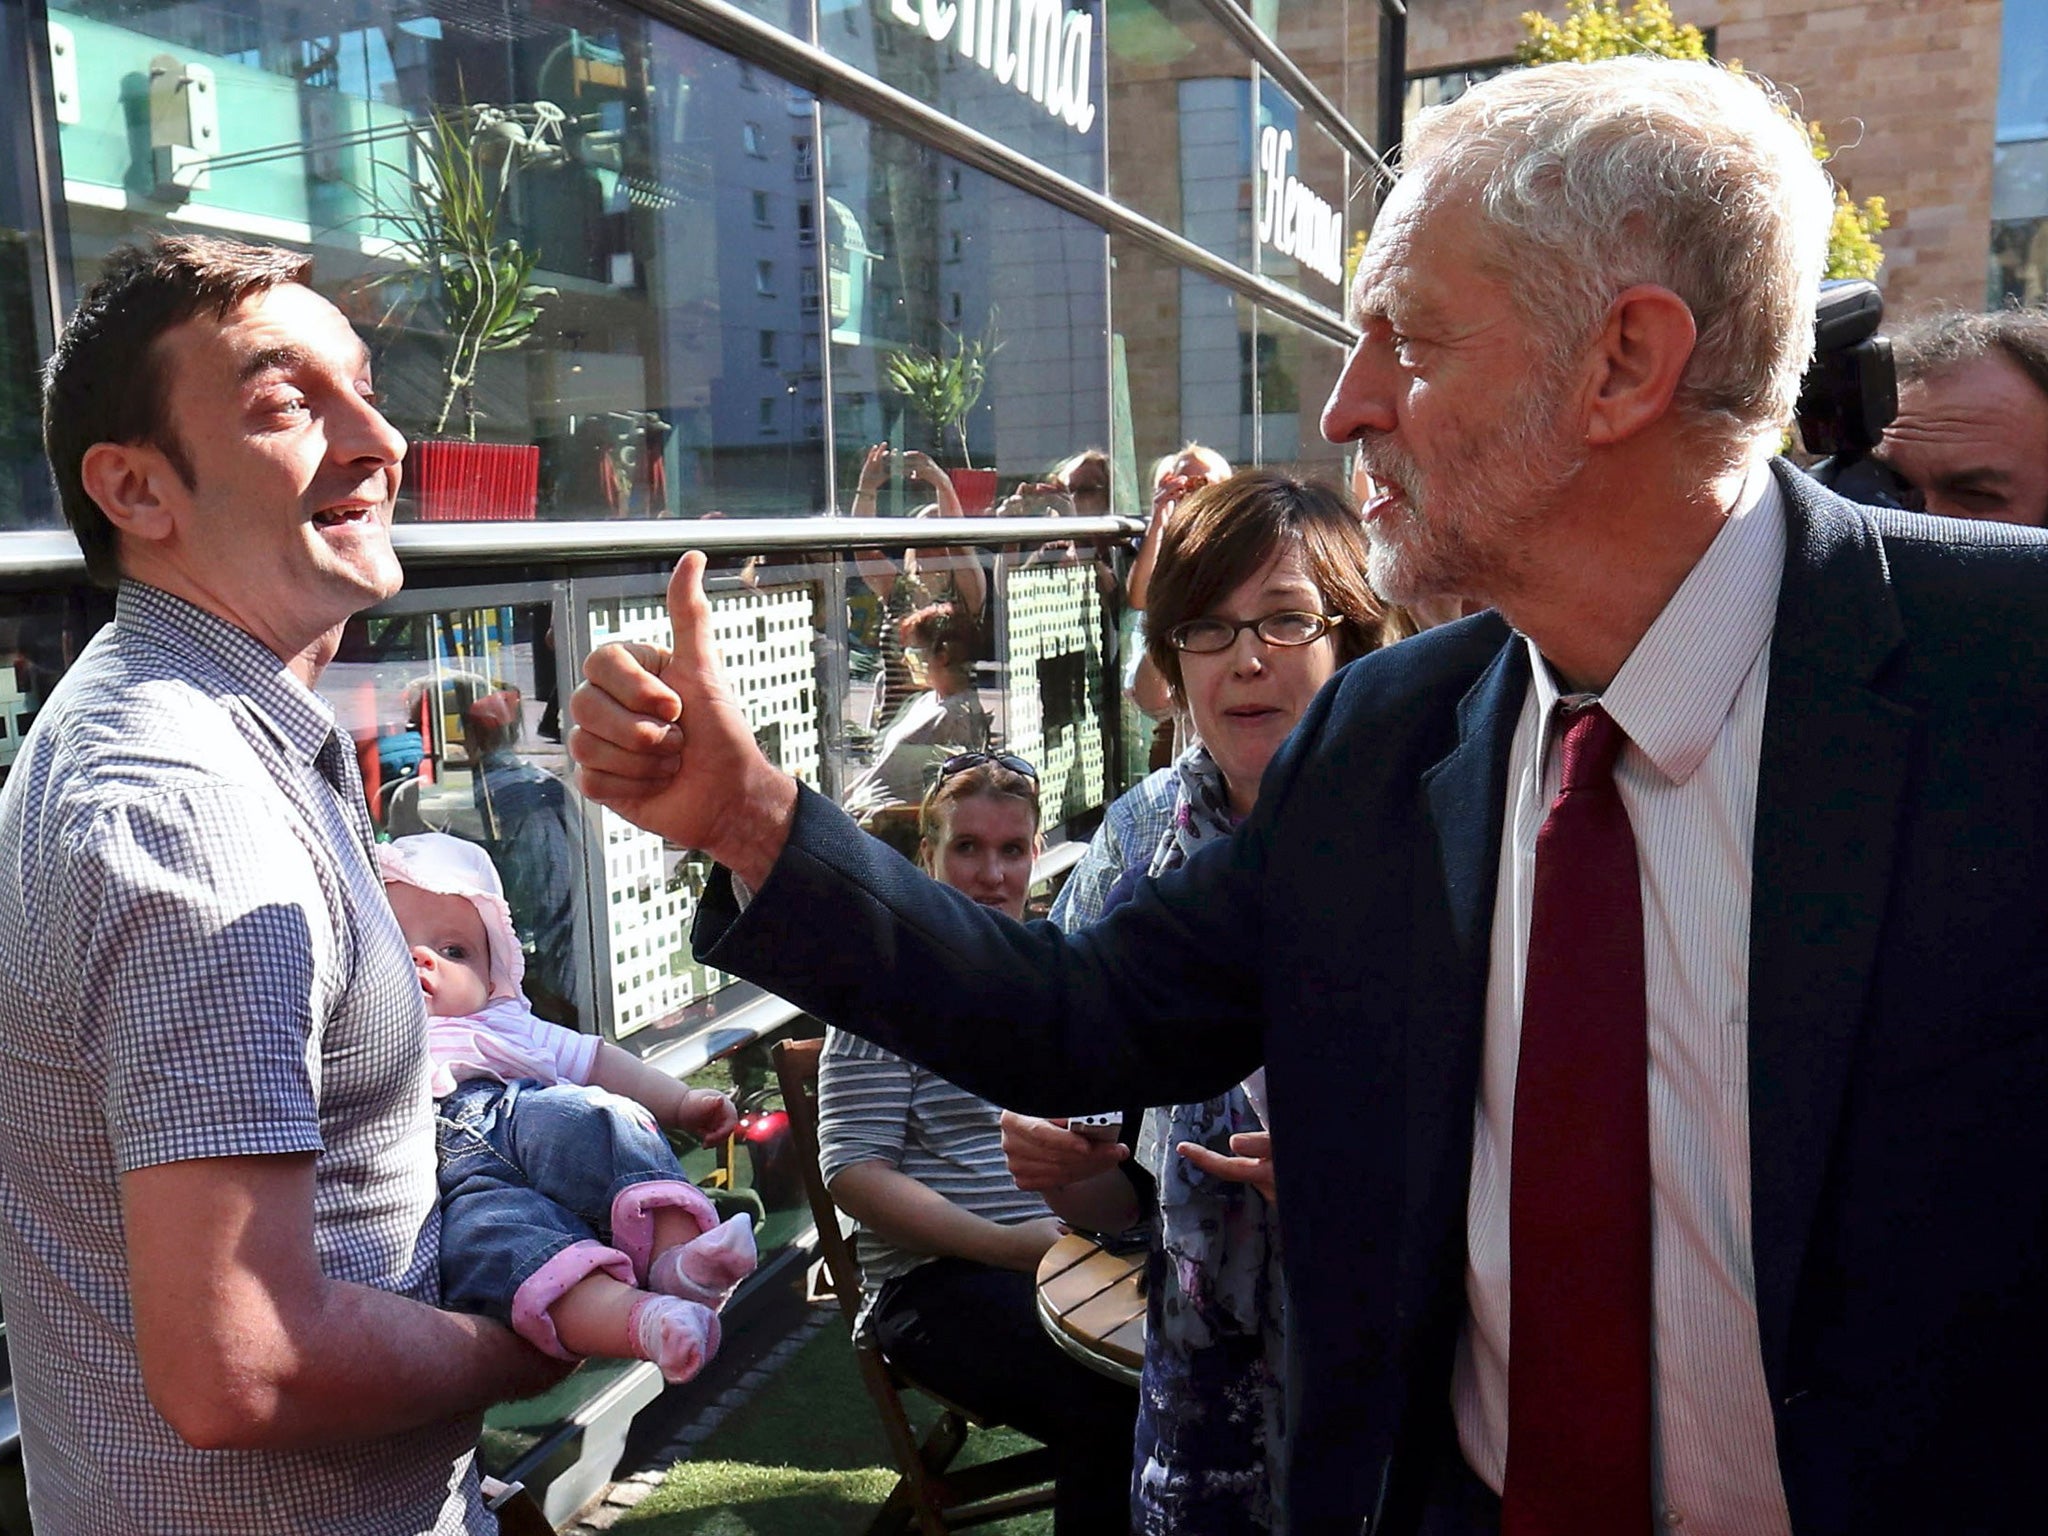 Jeremy Corbyn greets a man holding a baby in Edinburgh, Scotland